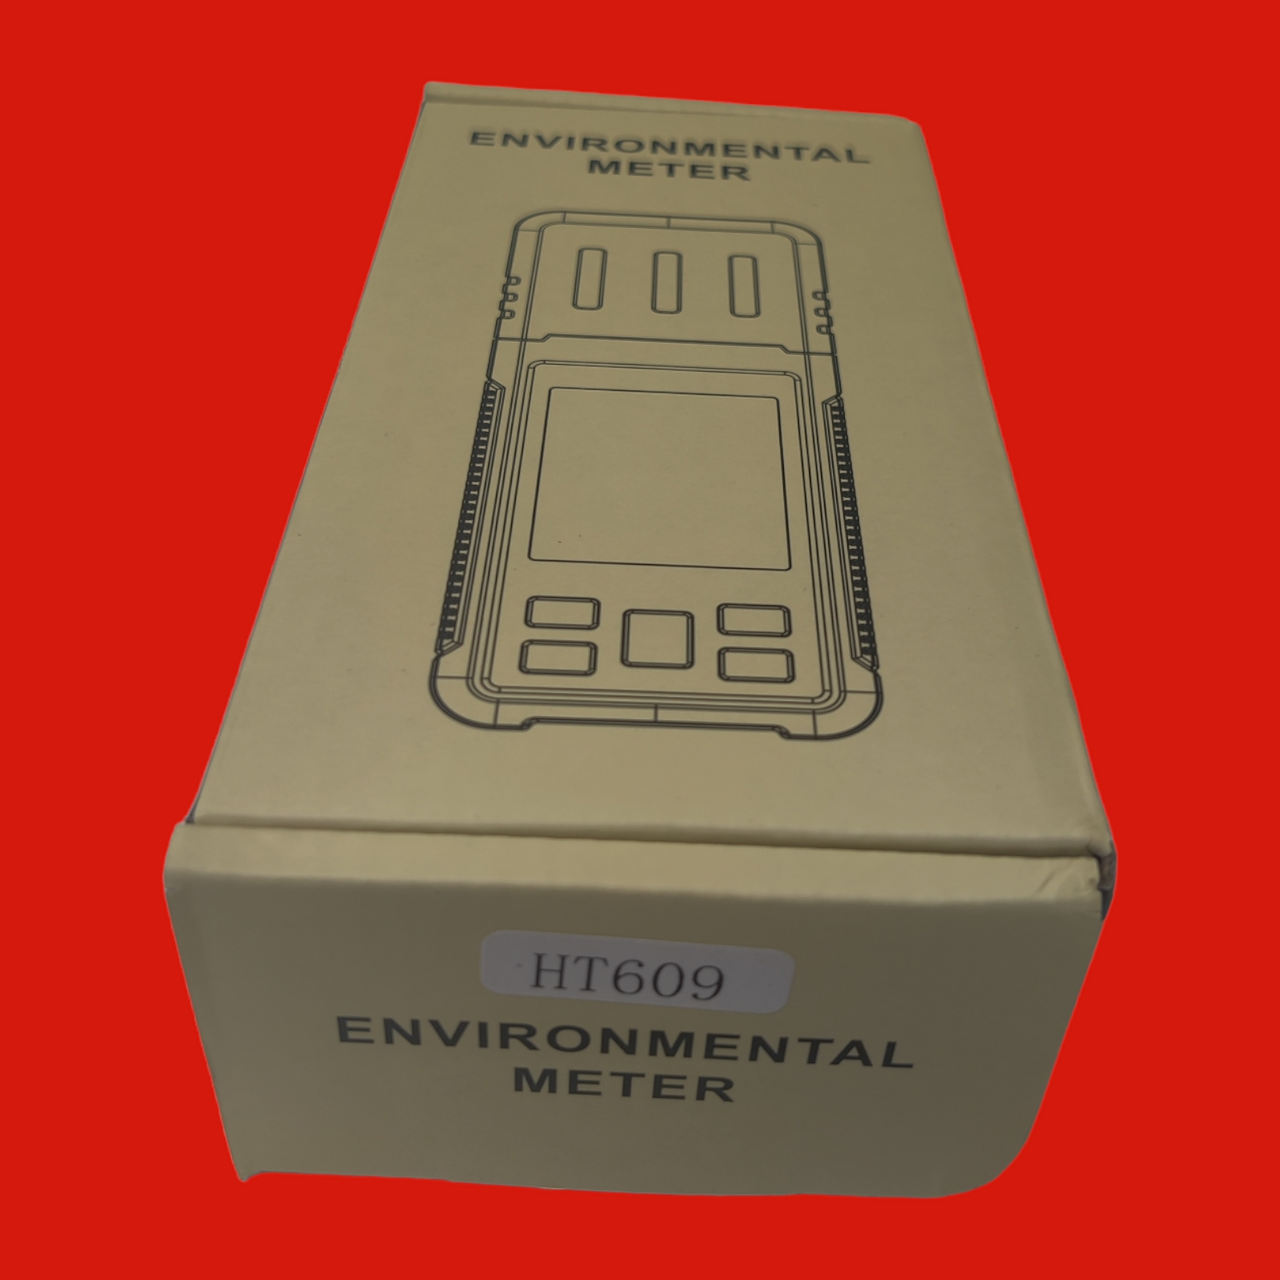 Habotest HT609 Portable Gas Leak Detector